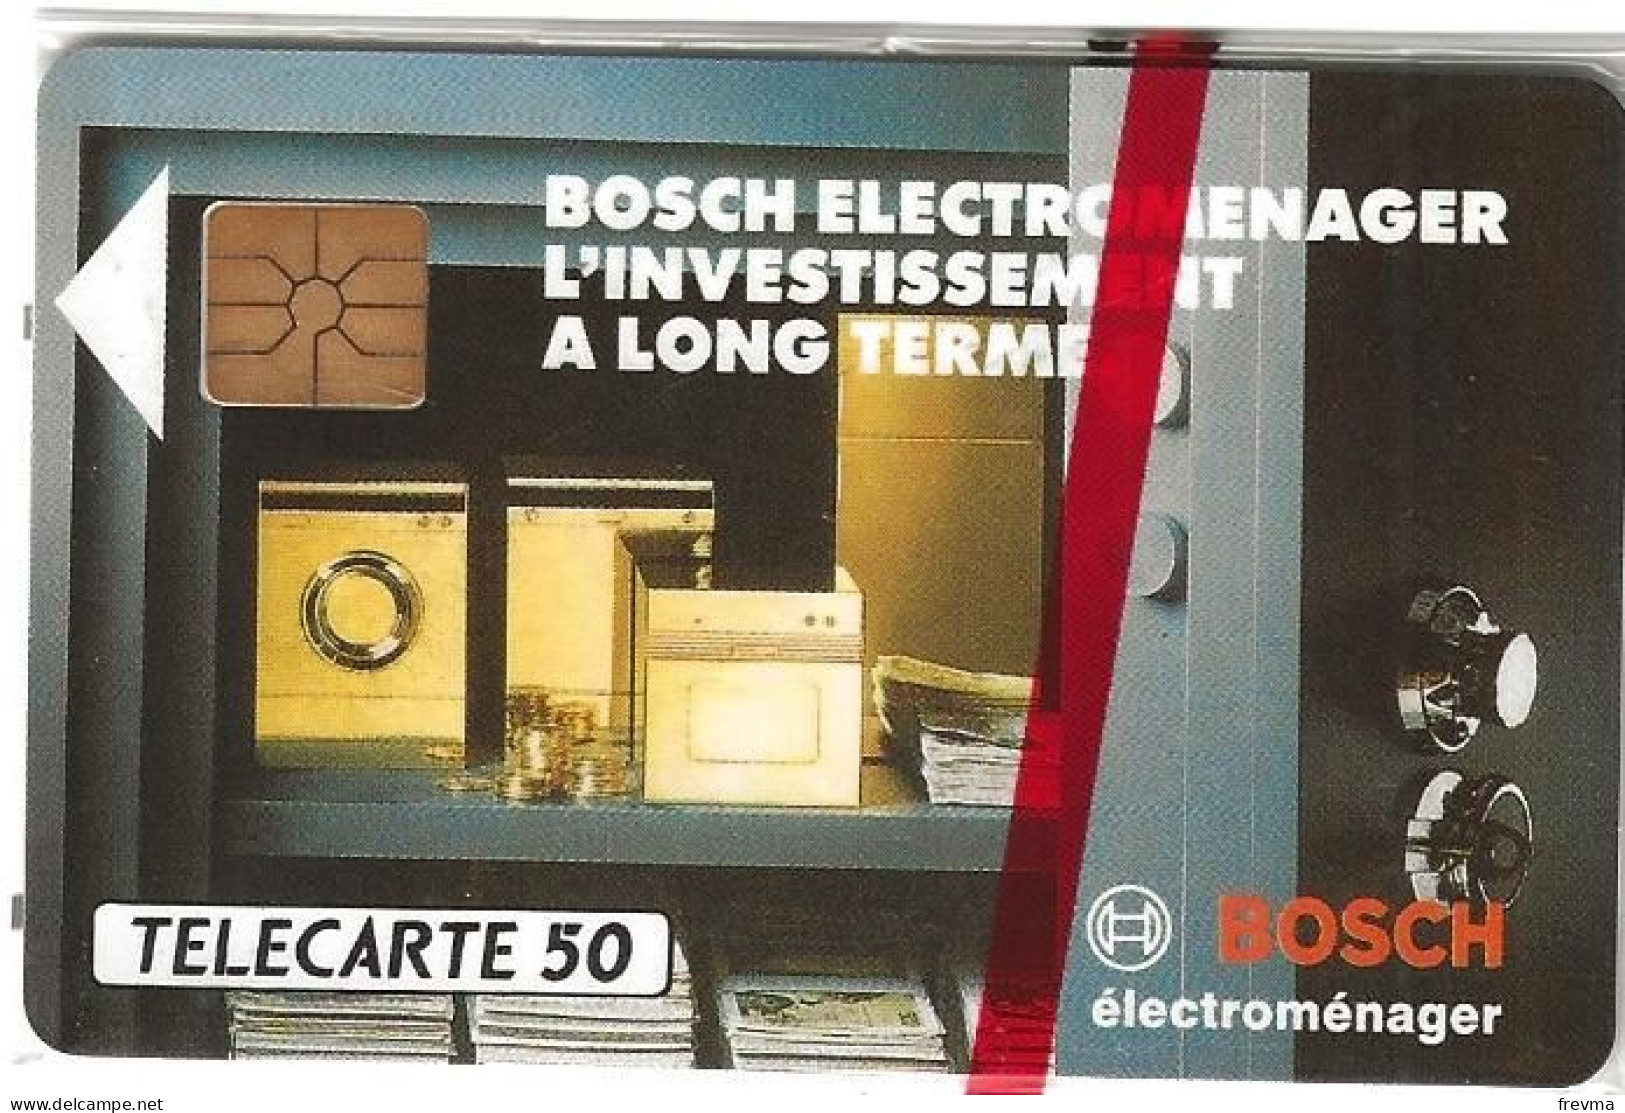 Telecarte E330 Bosch Electromenager 50 Unités NSB GEM - Privées